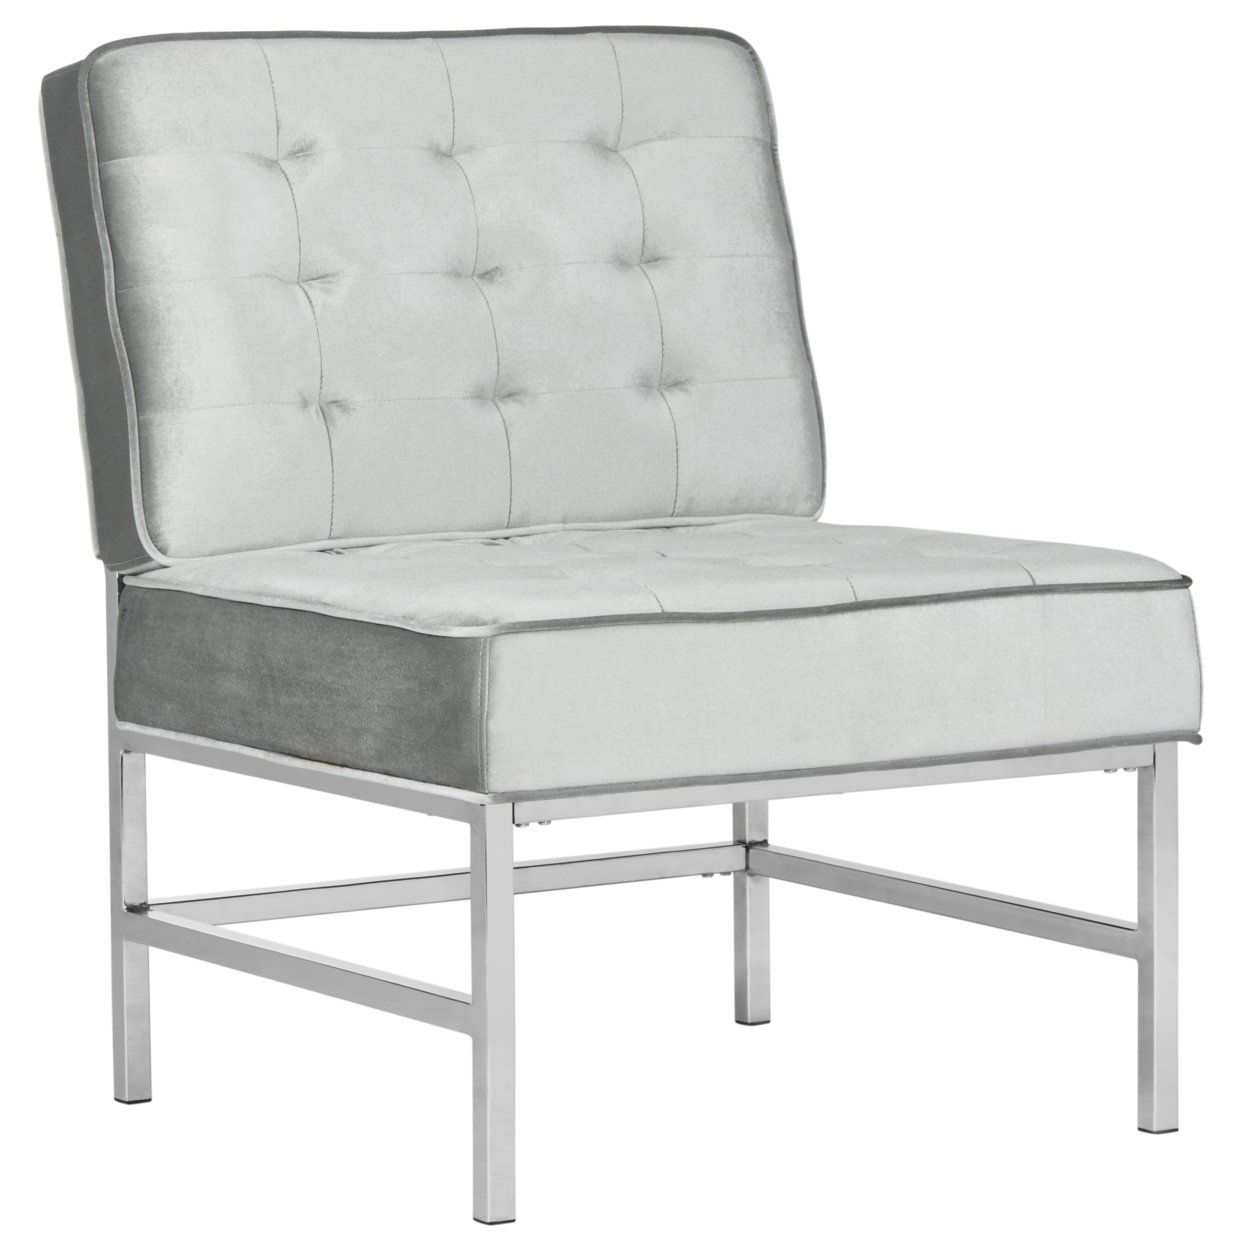 SAFAVIEH Ansel Modern Tufted Linen Chrome Accent Chair Light Grey